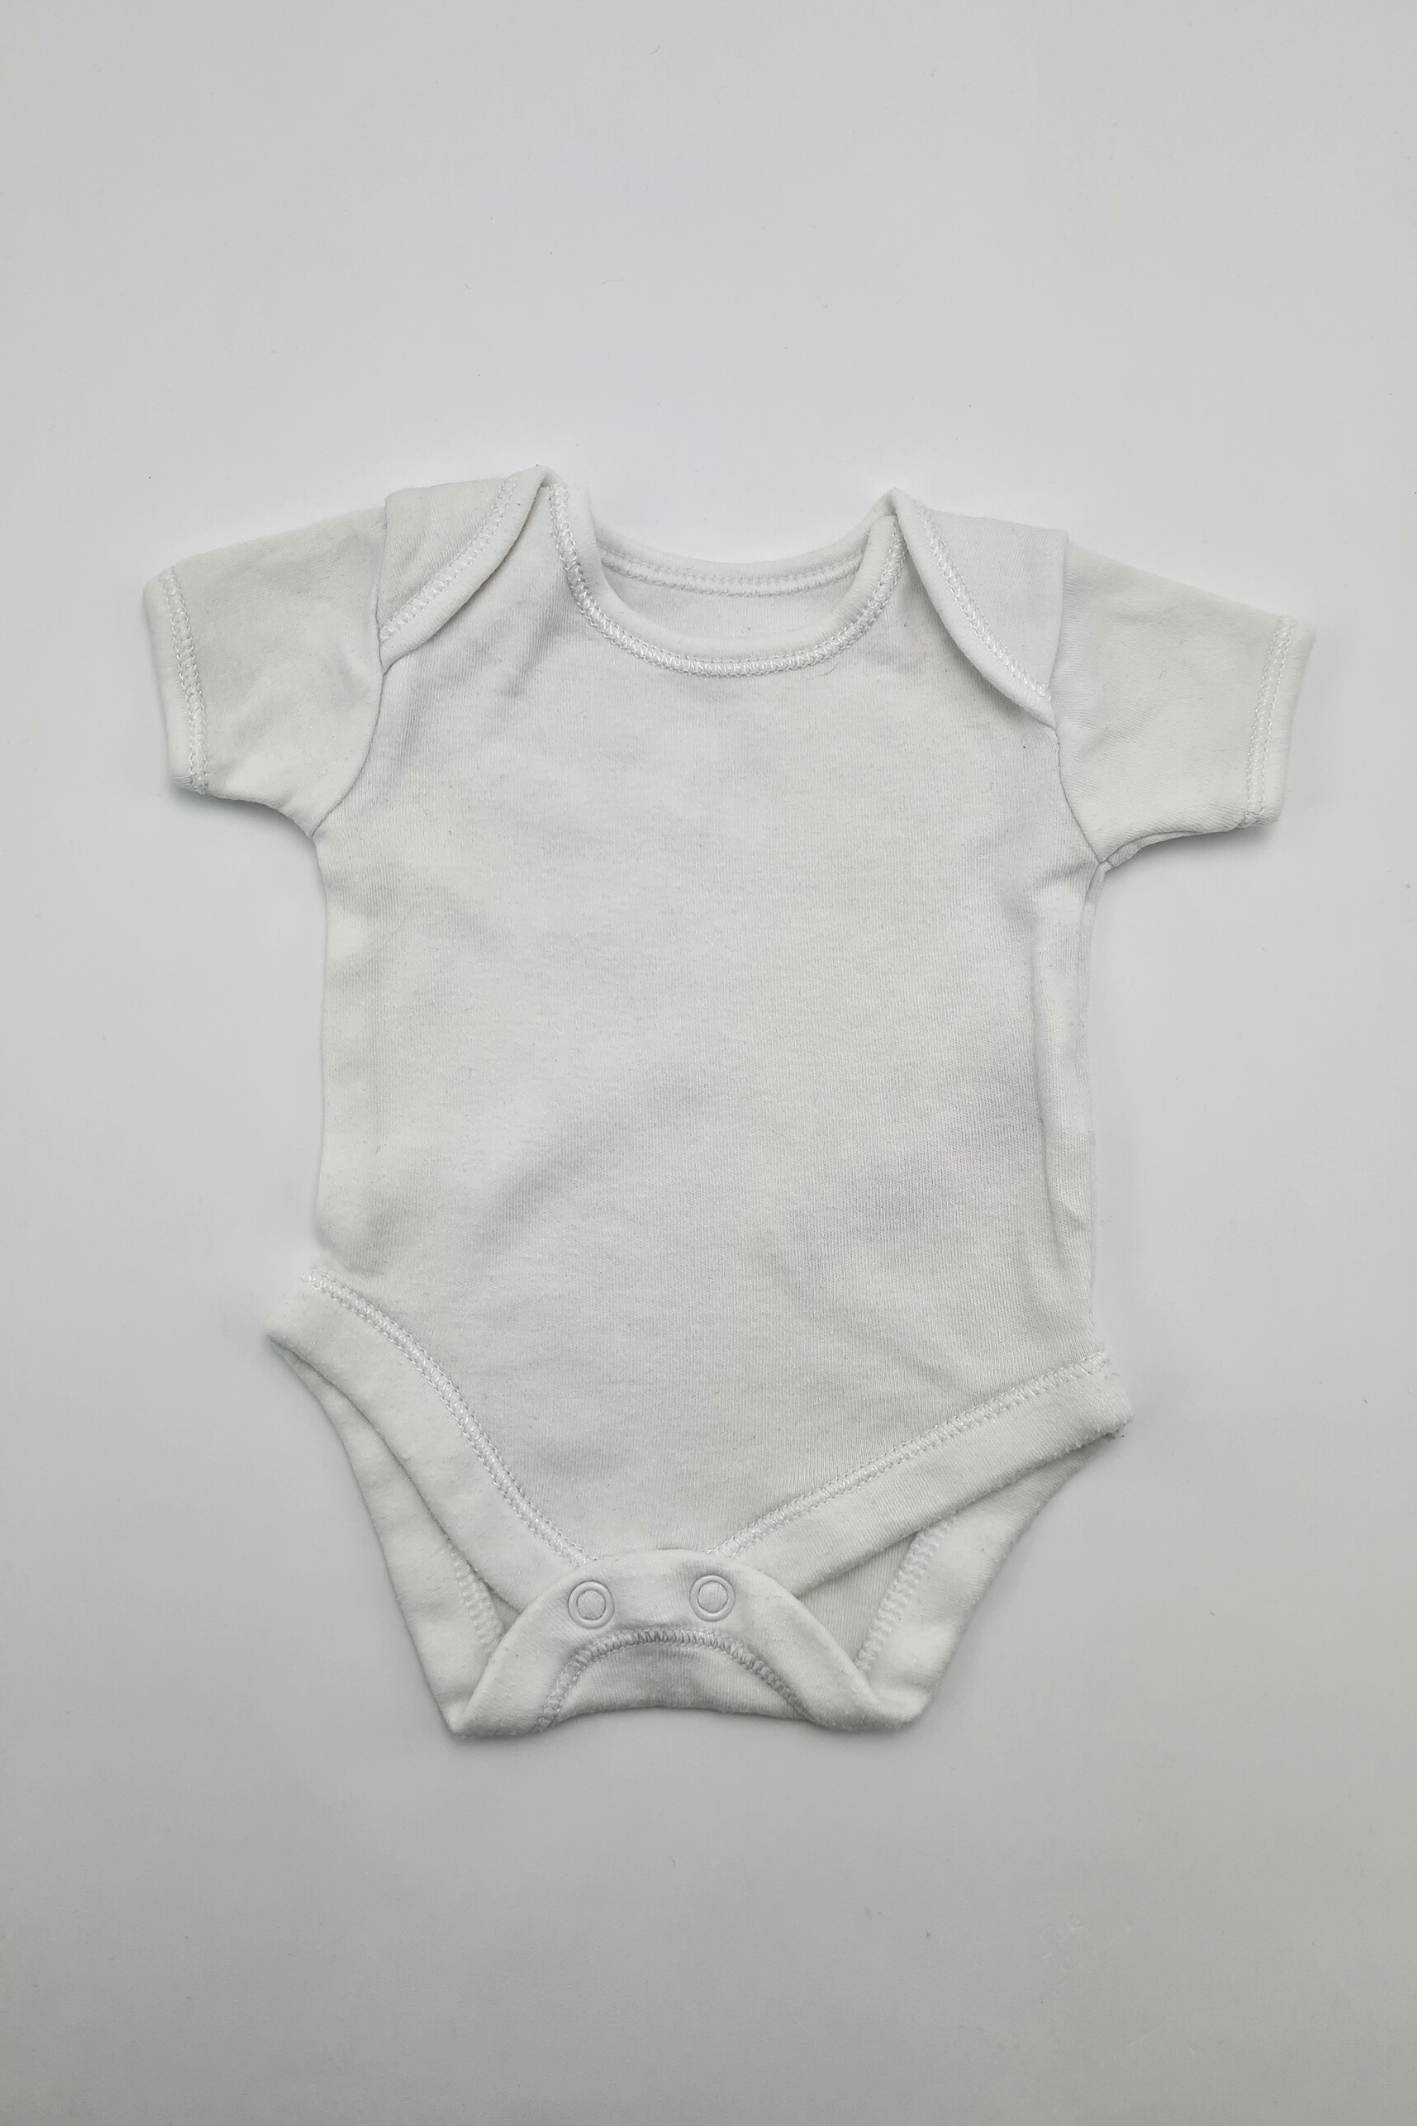 Tiny Baby (6lbs) - 100% Cotton White Bodysuit (George)